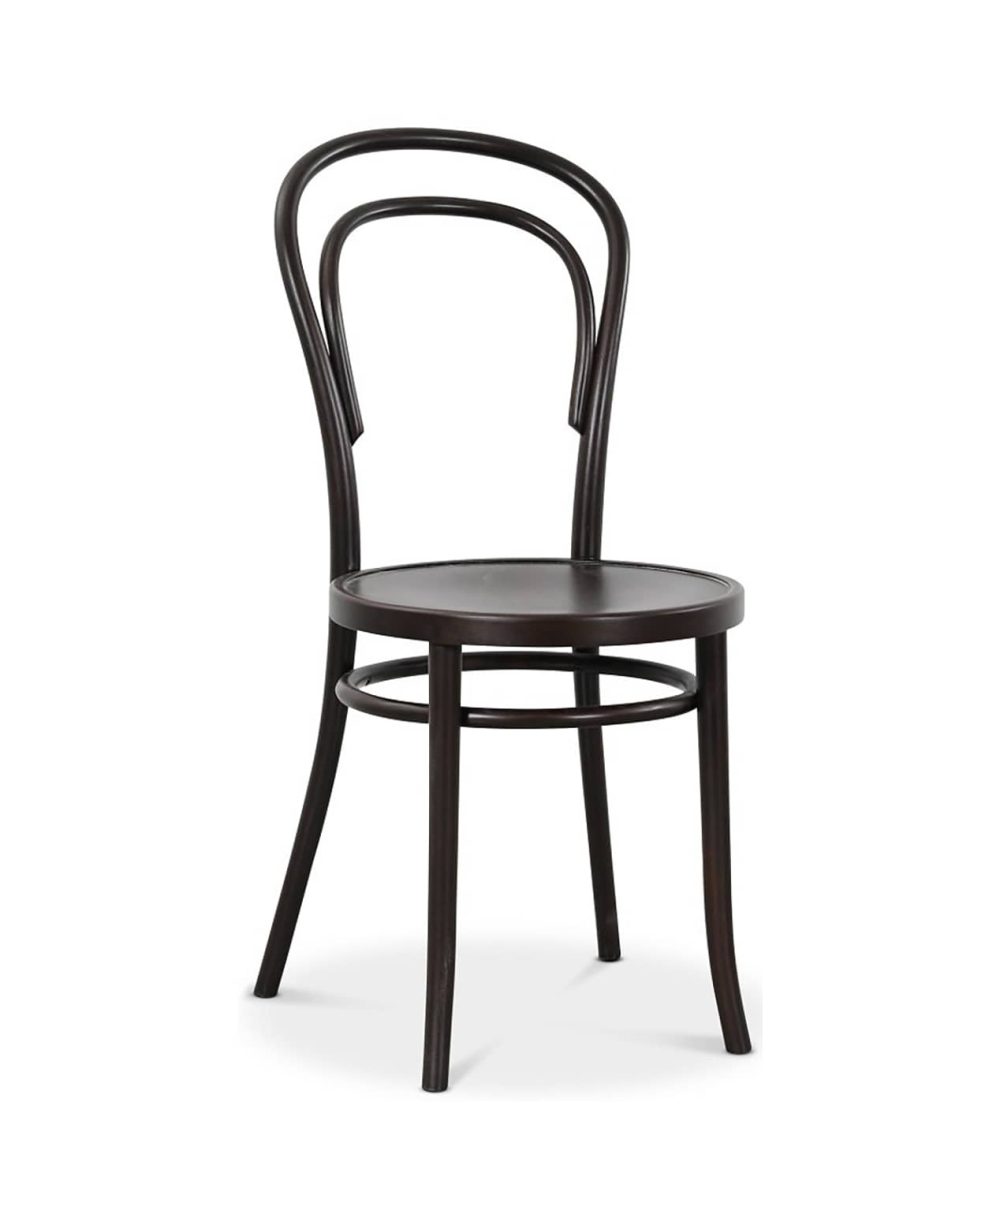 curved-no14-chair-black-profile.jpg